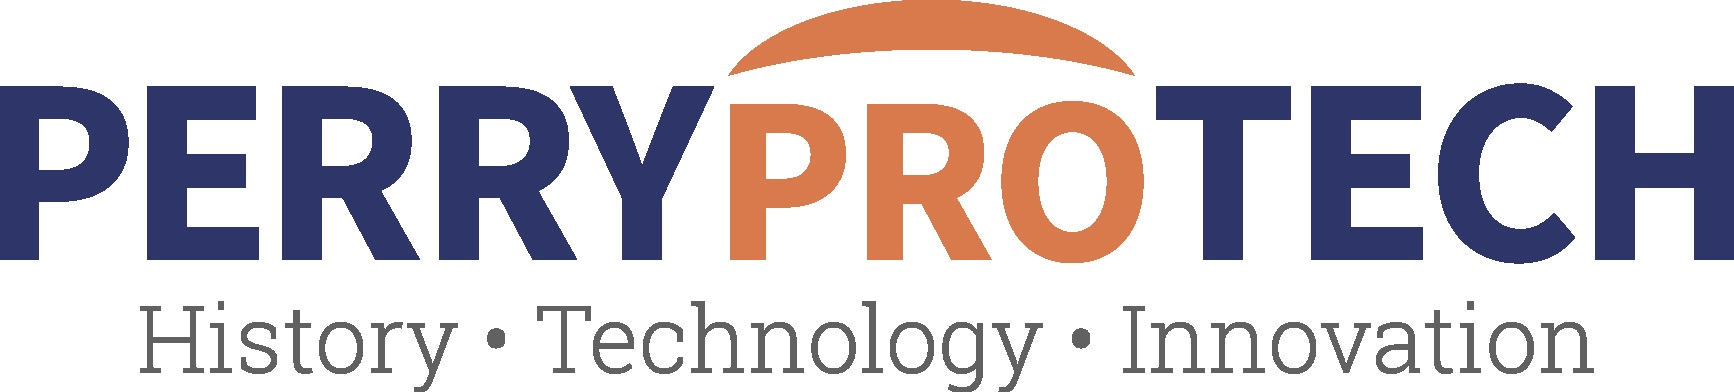 PERRYproTECH Company Logo